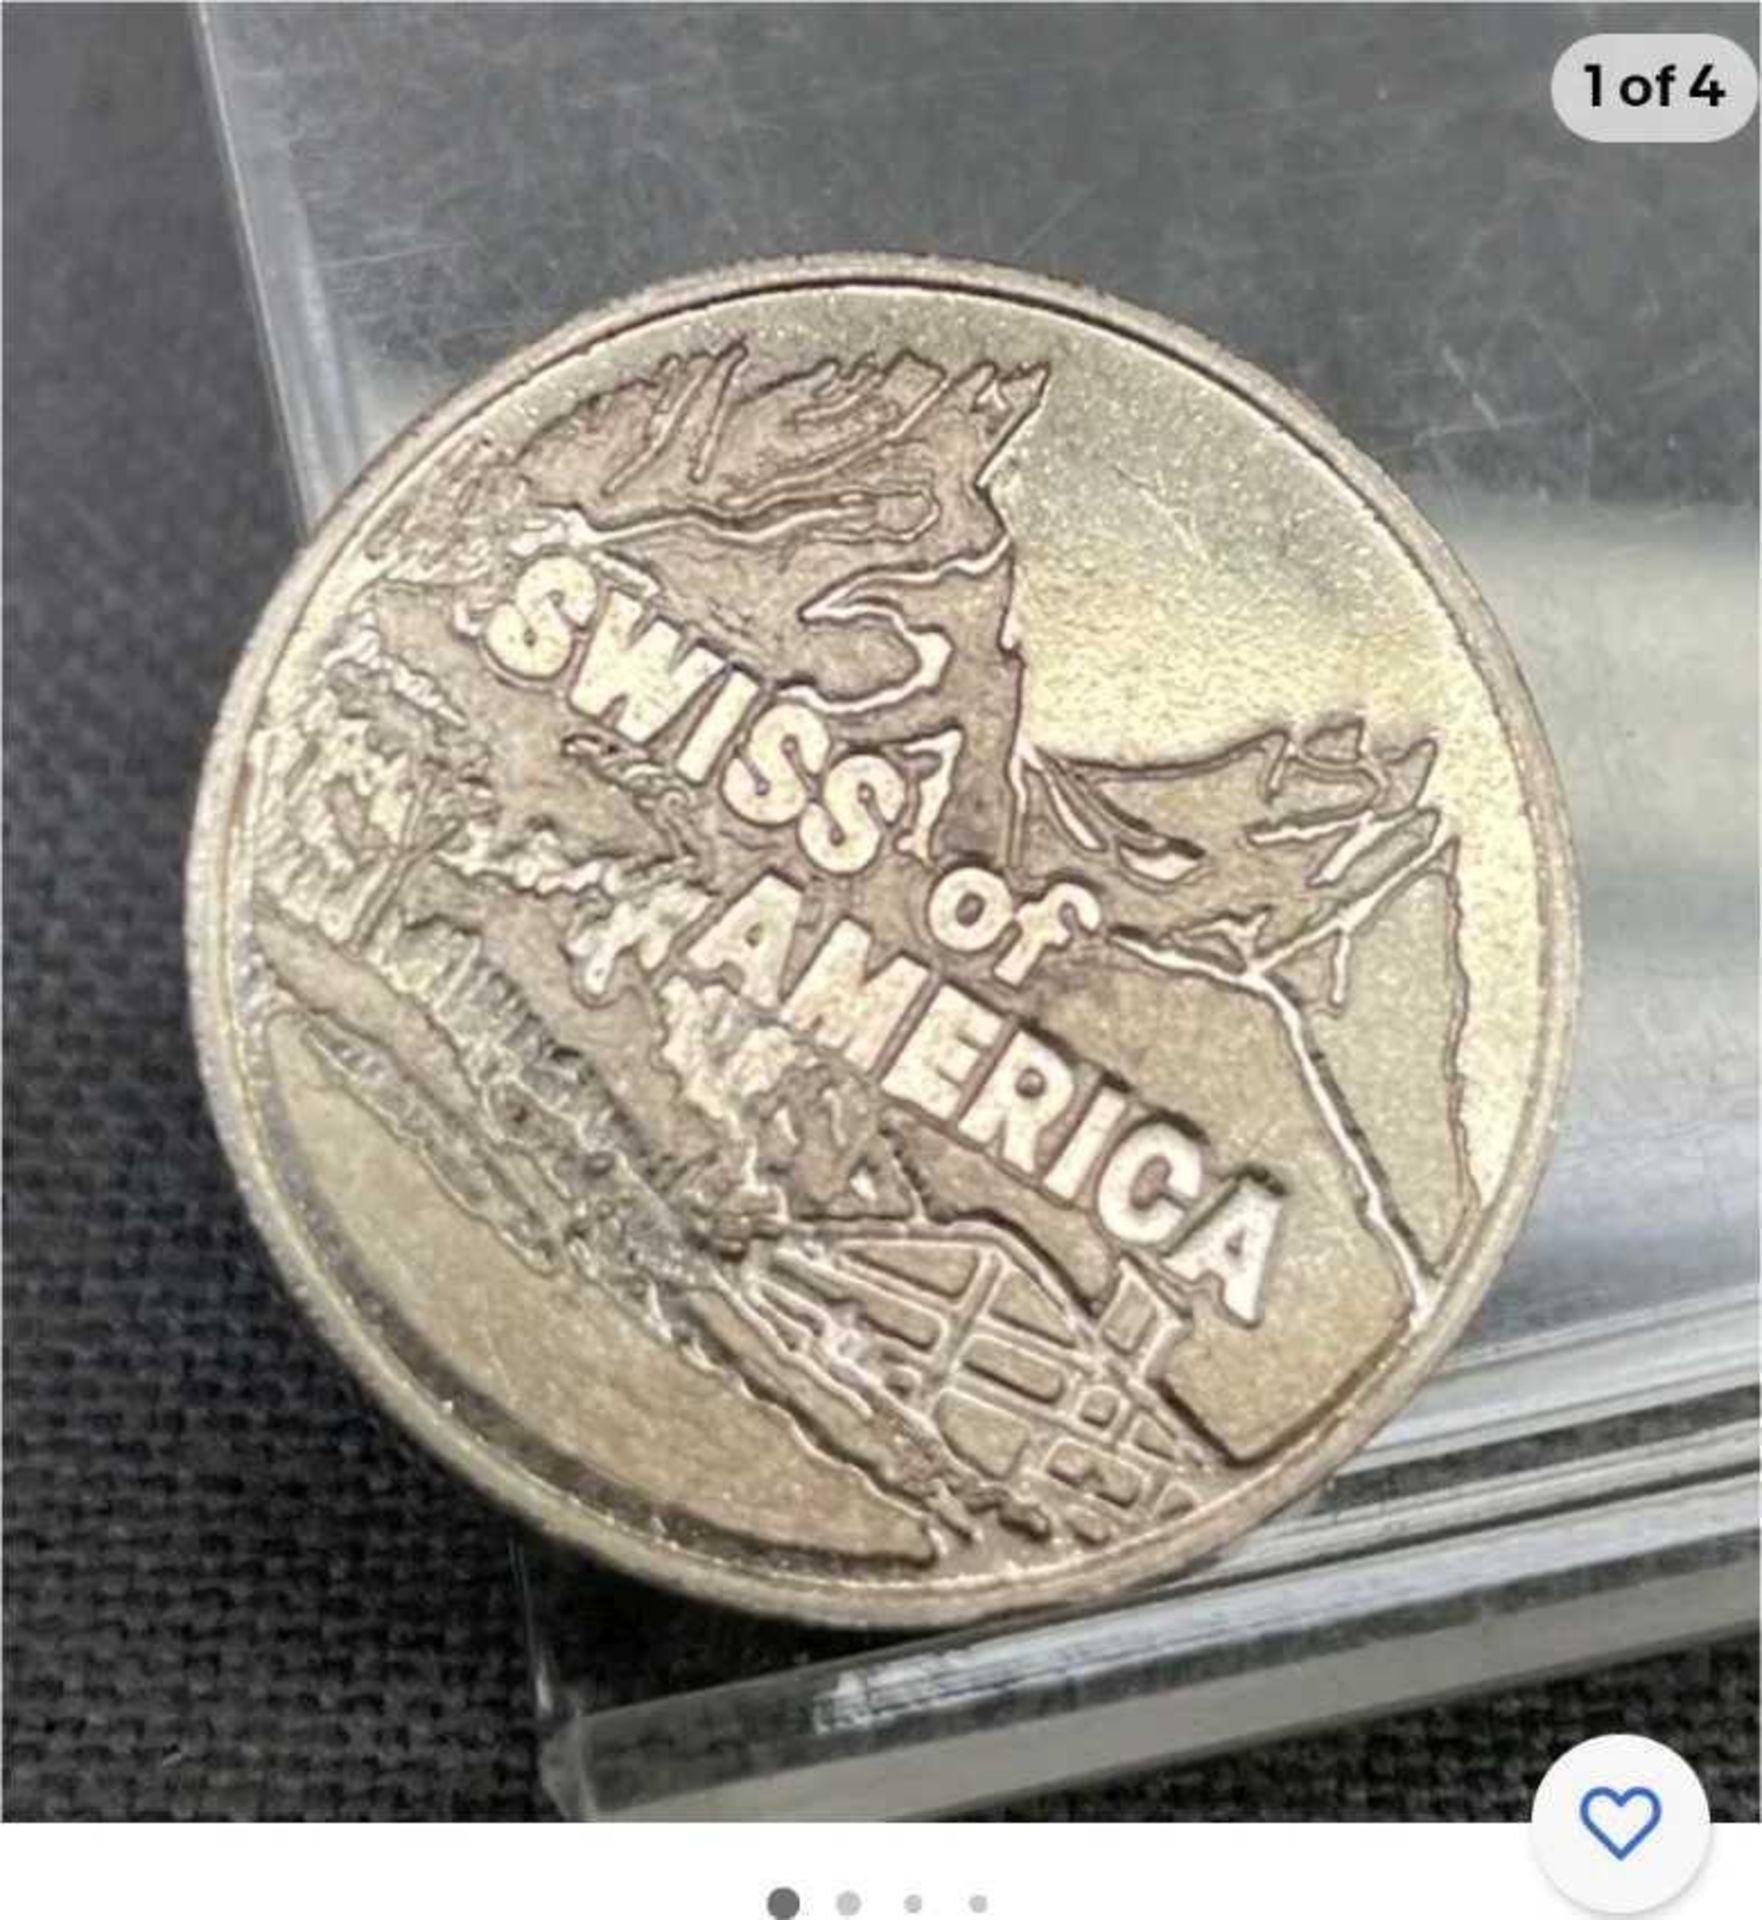 rare 20 1 oz Swiss of America coins in original tube - Image 5 of 8